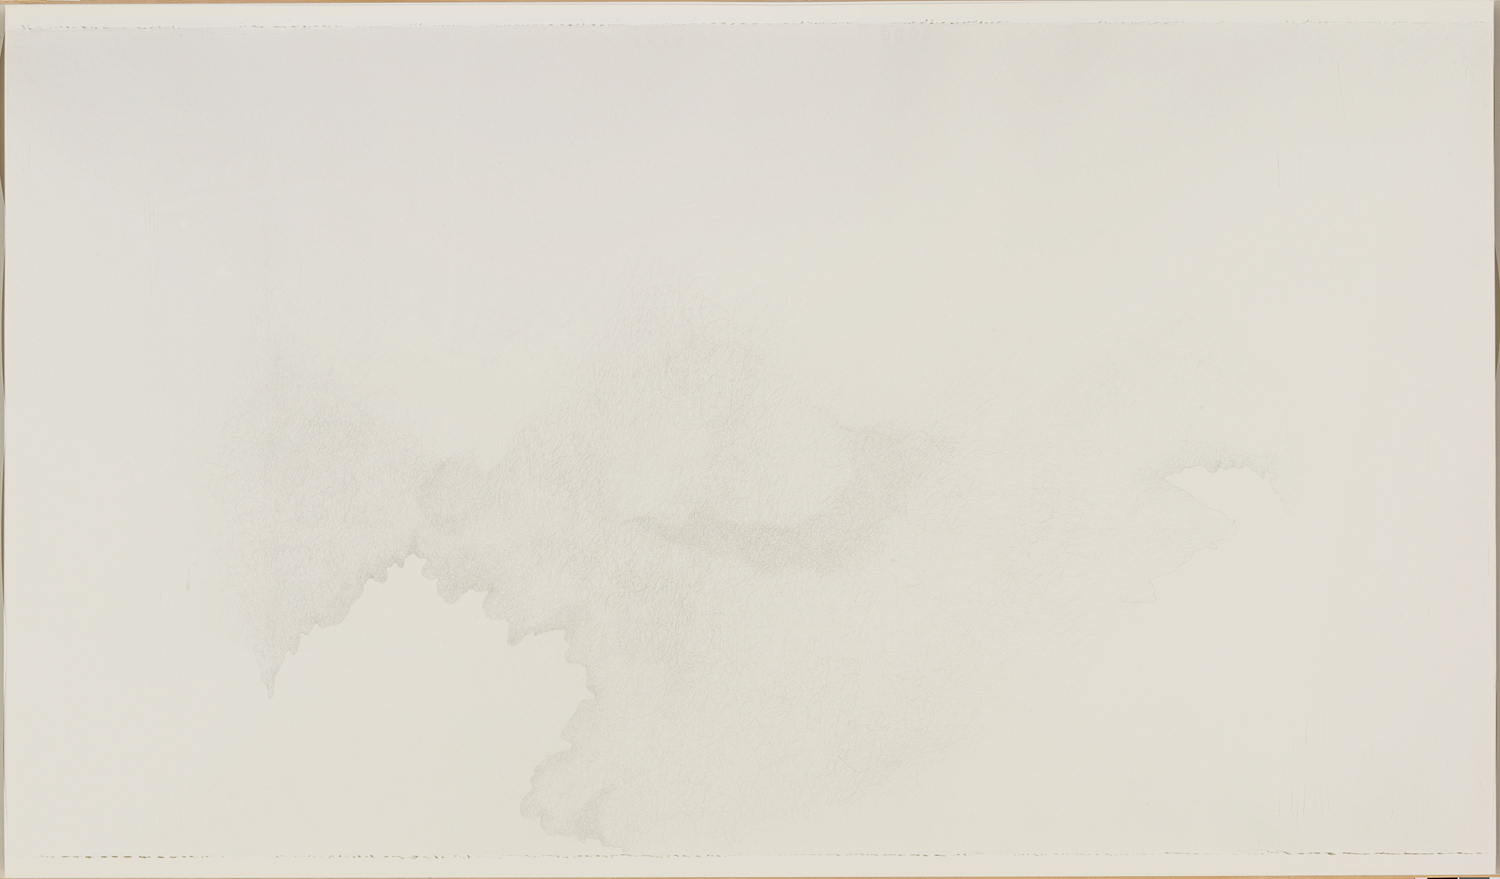  Cloud Cliff Scribble, 2006, 76 in. long 